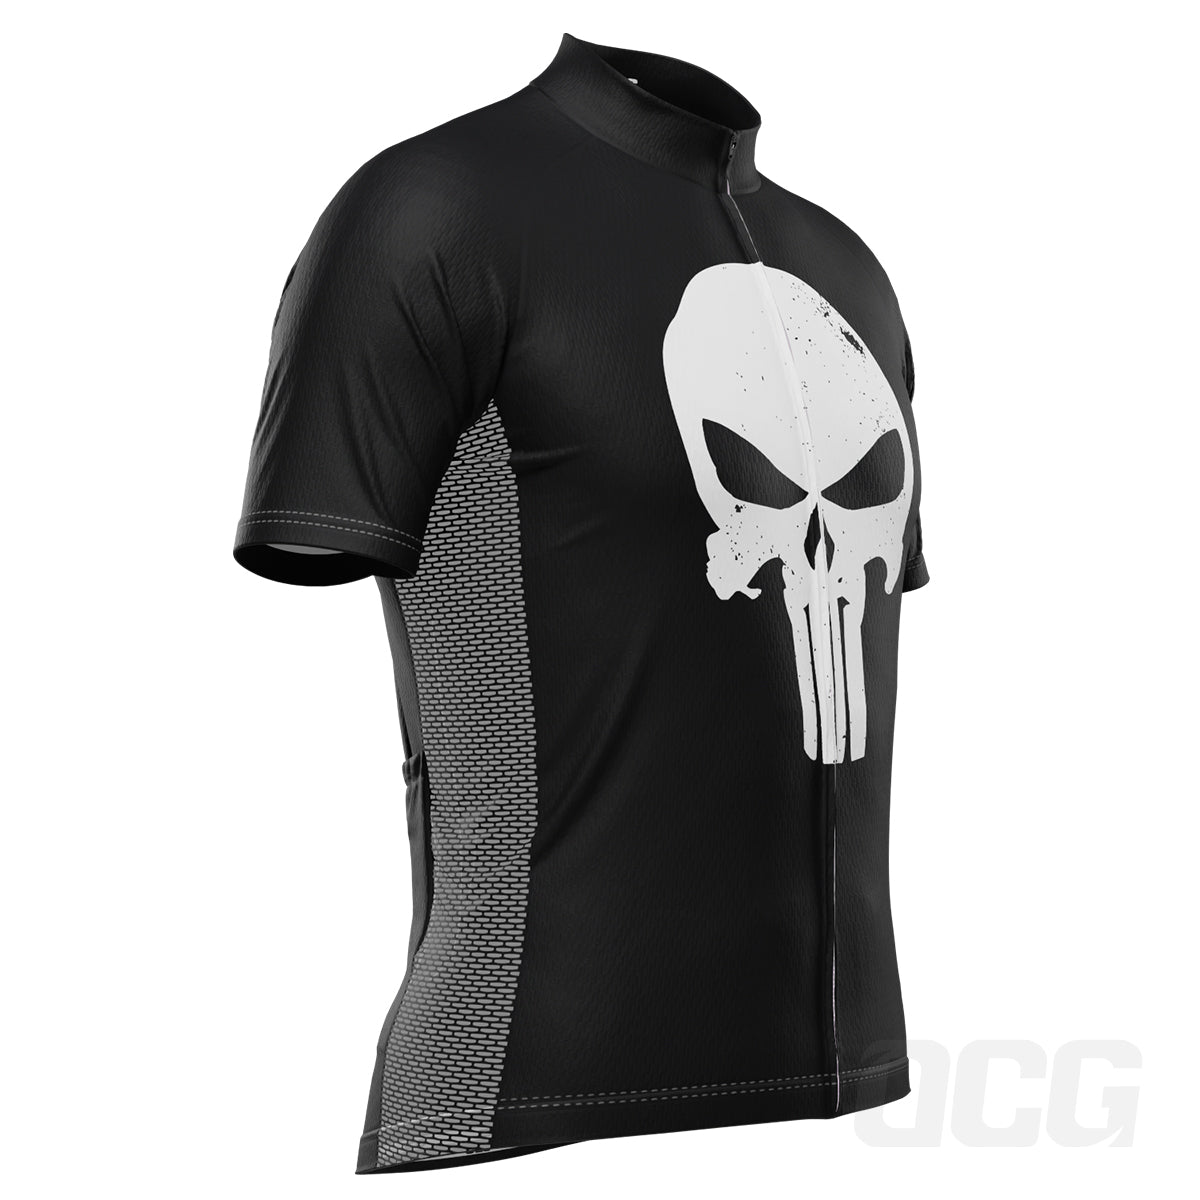 Men's Punisher Skull Short Sleeve Cycling Jersey